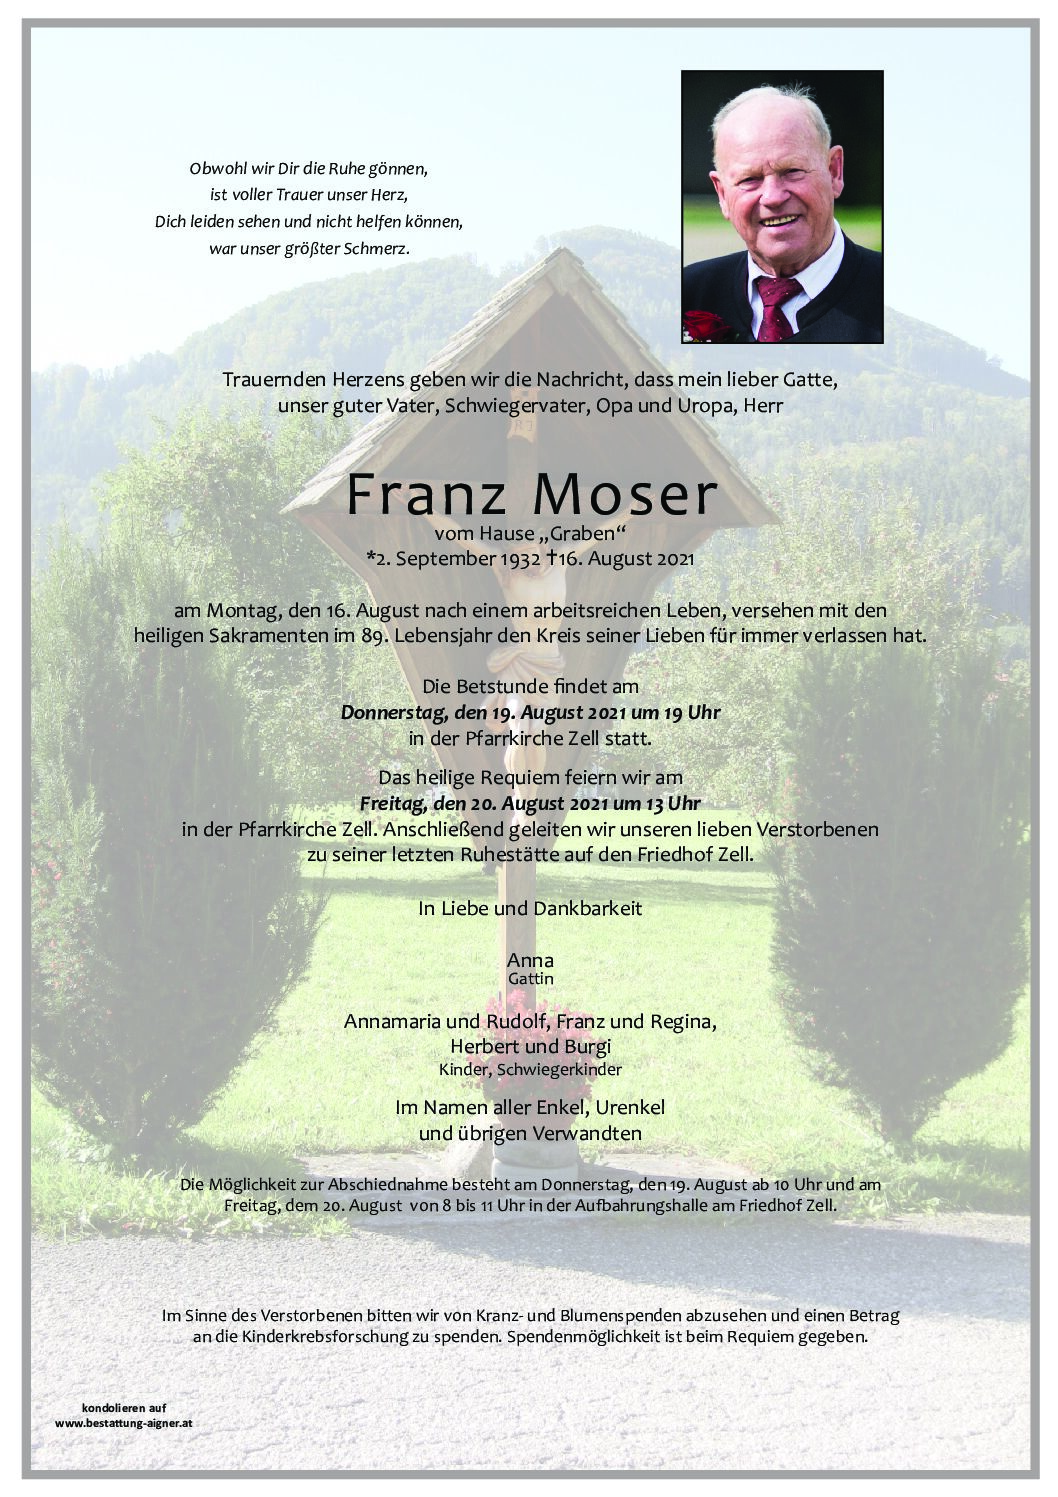 Franz Moser